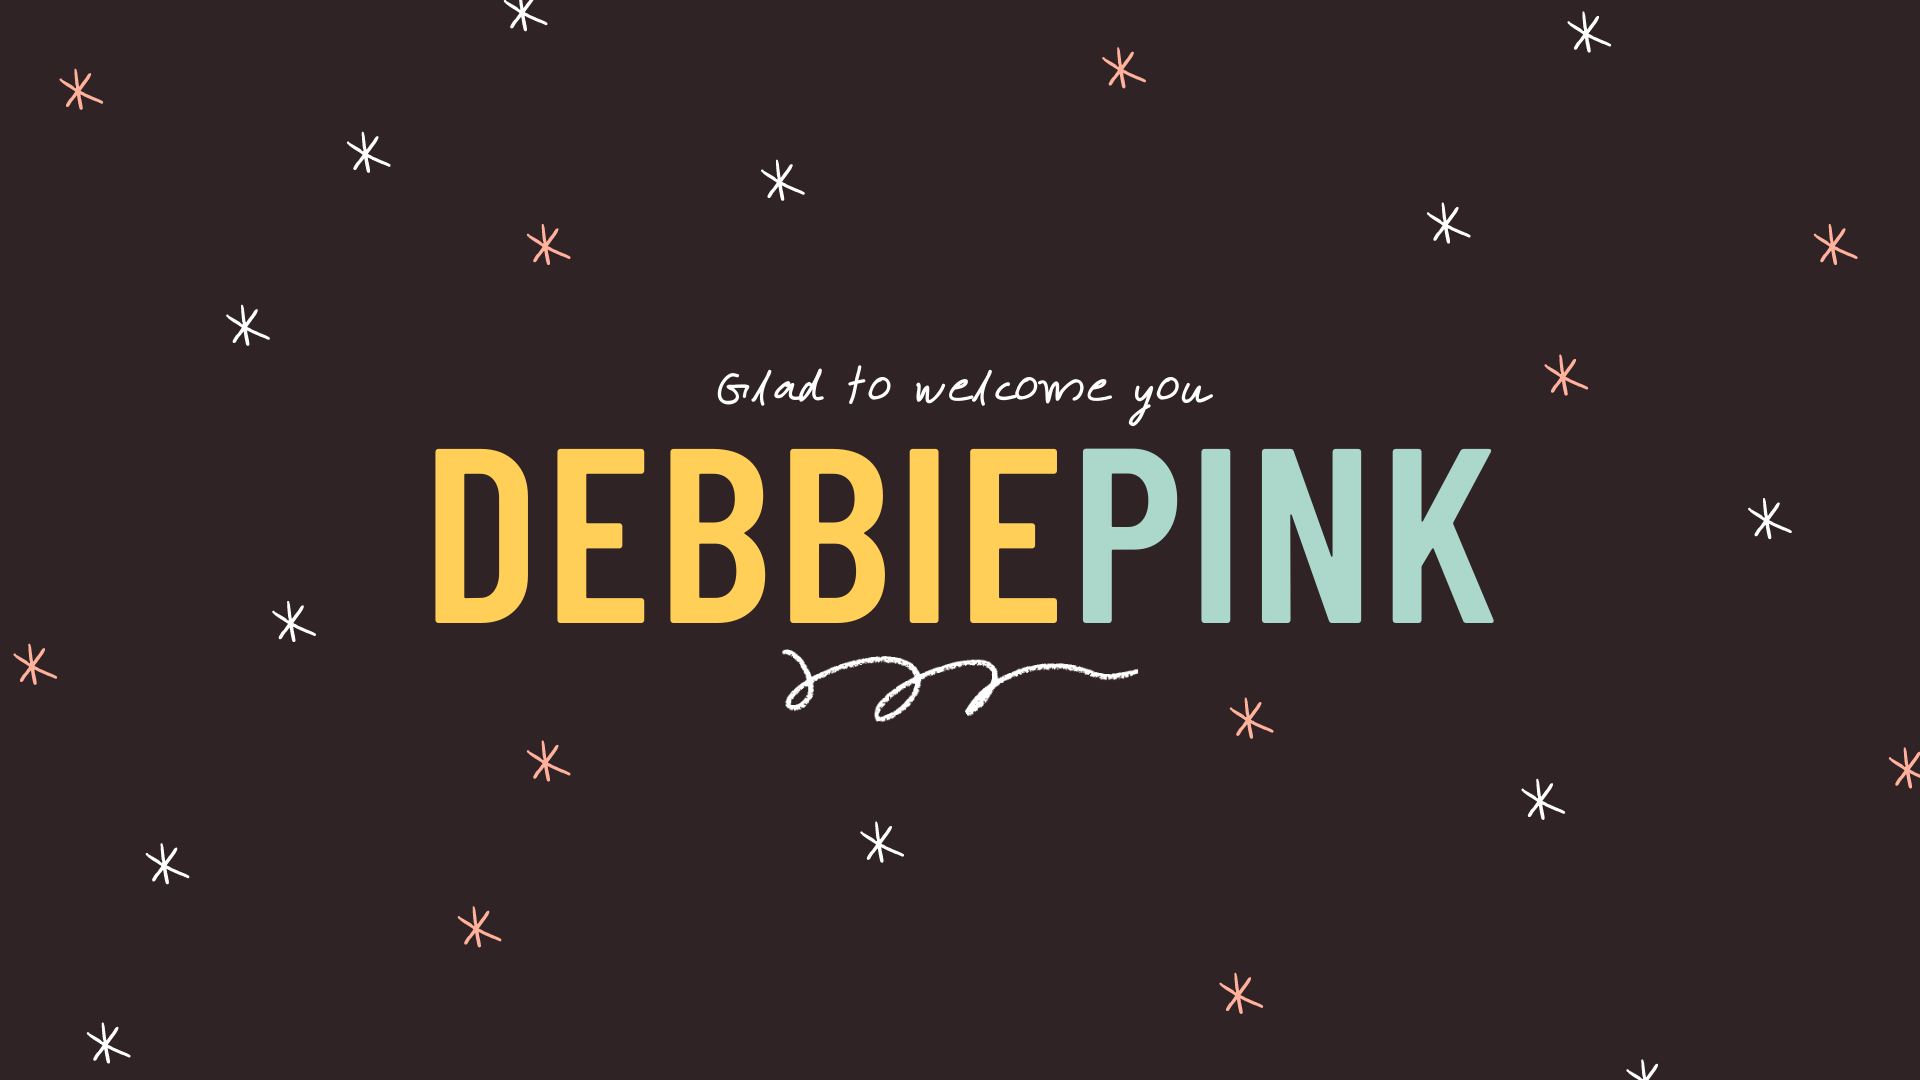 DebbiePink 1 image: 1